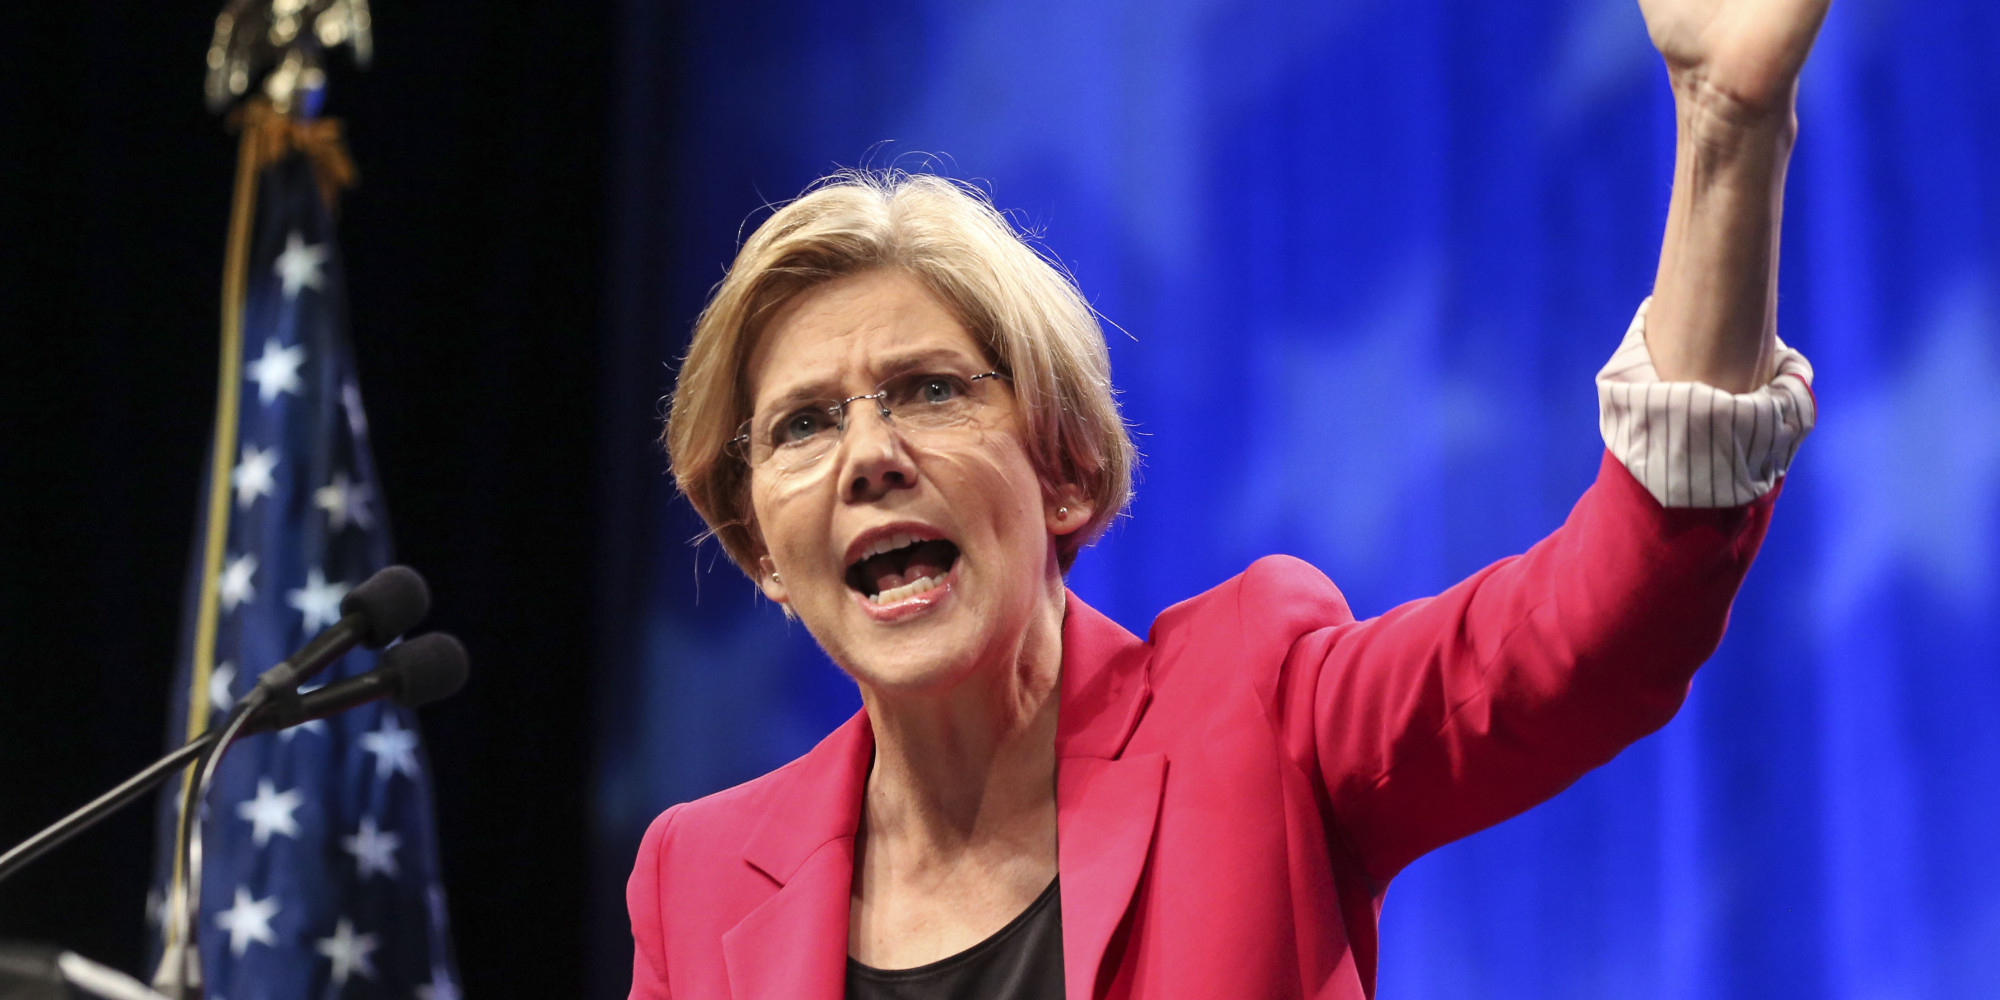 Can Elizabeth Warren unite a divided Democratic party to stop Trump?